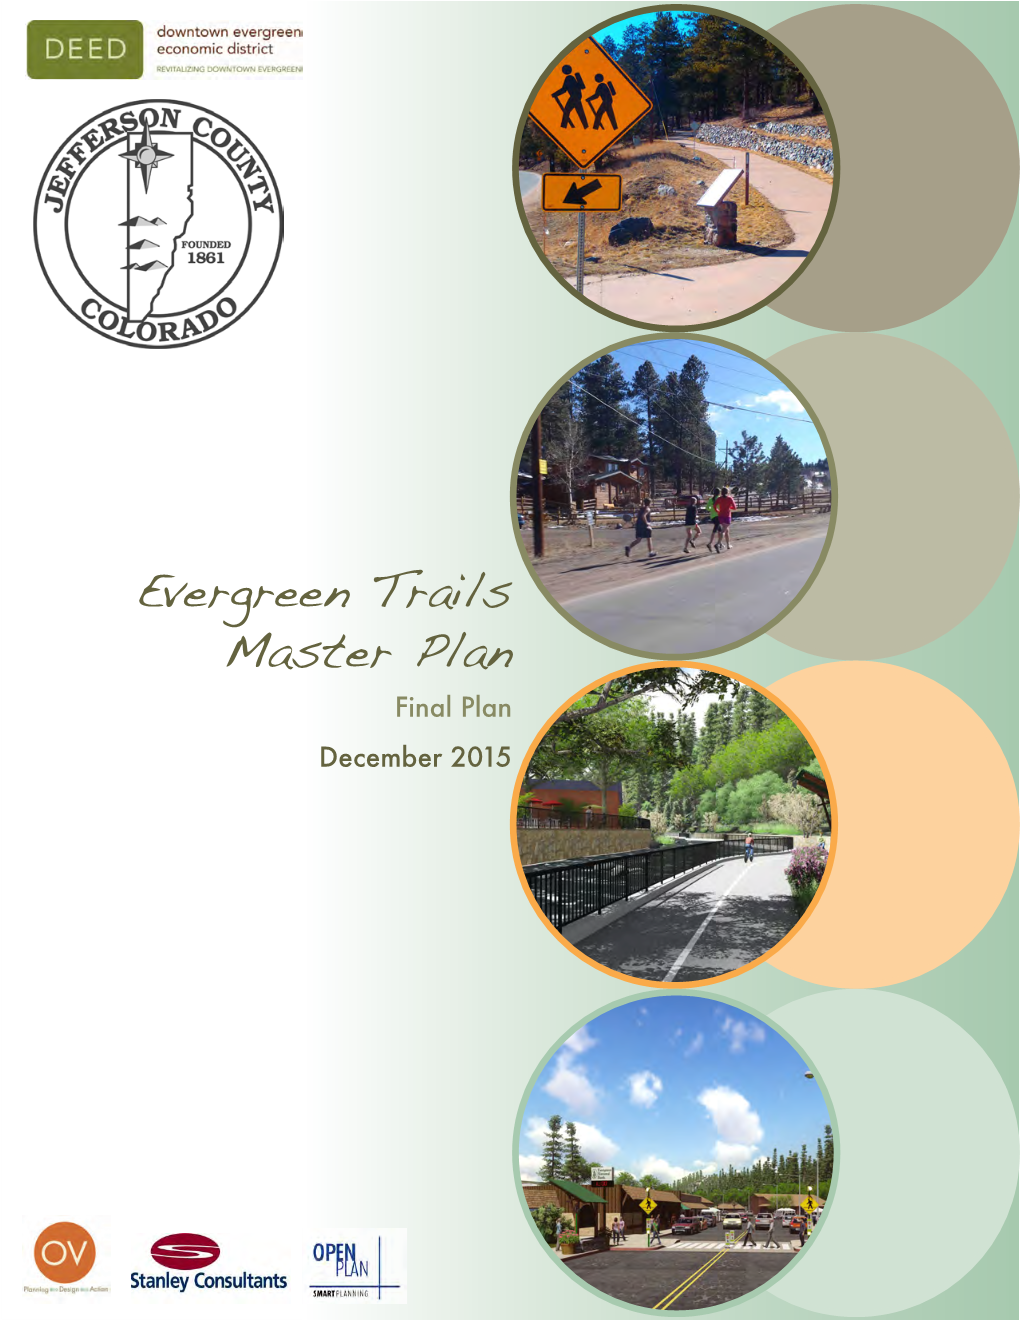 Evergreen Trails Master Plan Final Plan December 2015